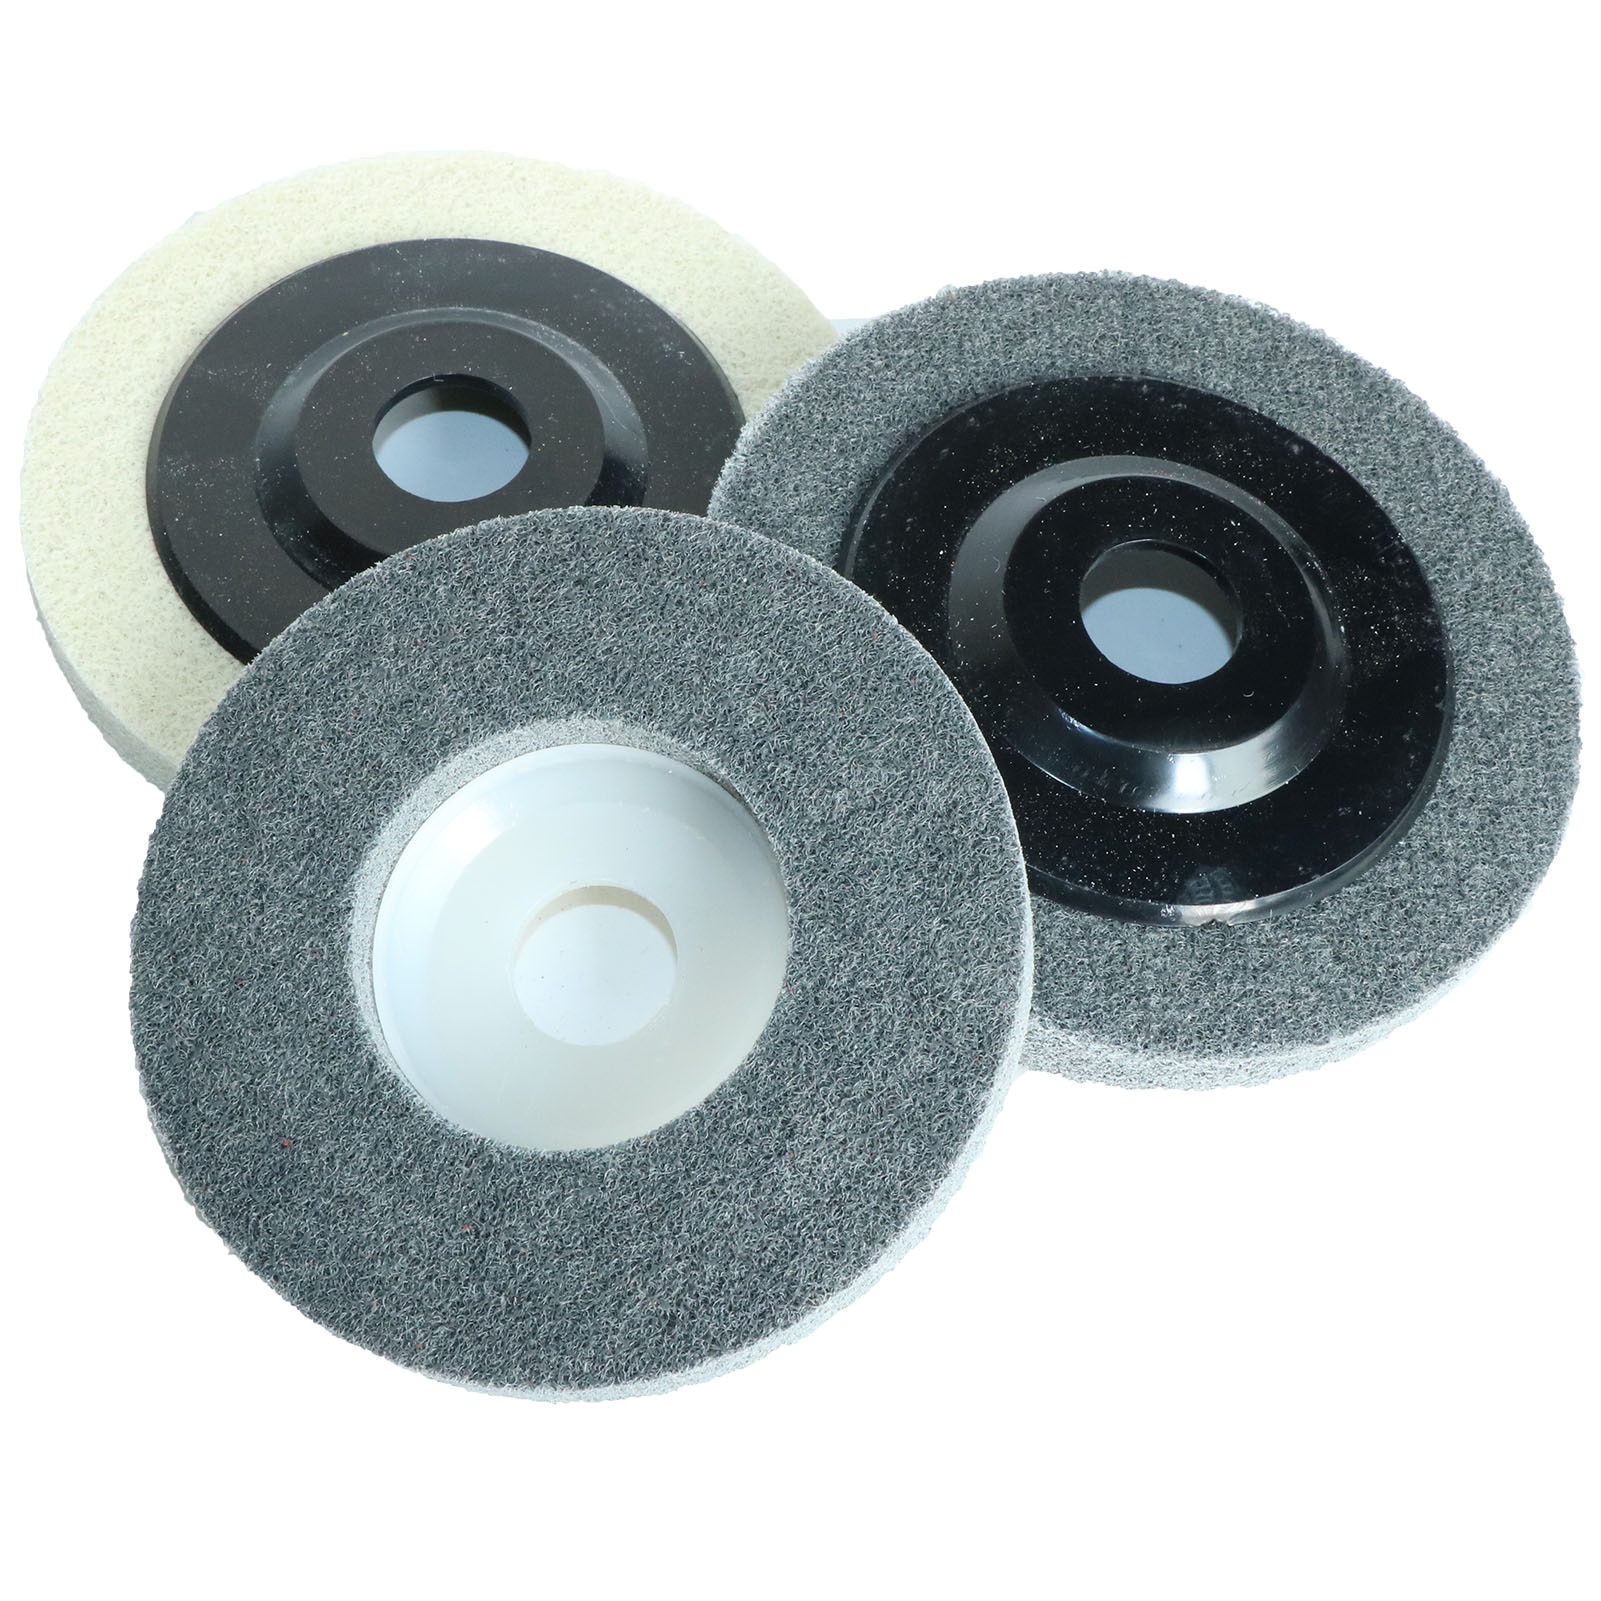 1pc 115/125mm Nylon Fiber Flap Polishing Wheel Disc For Angle Grinder For Wood Metal Buffing